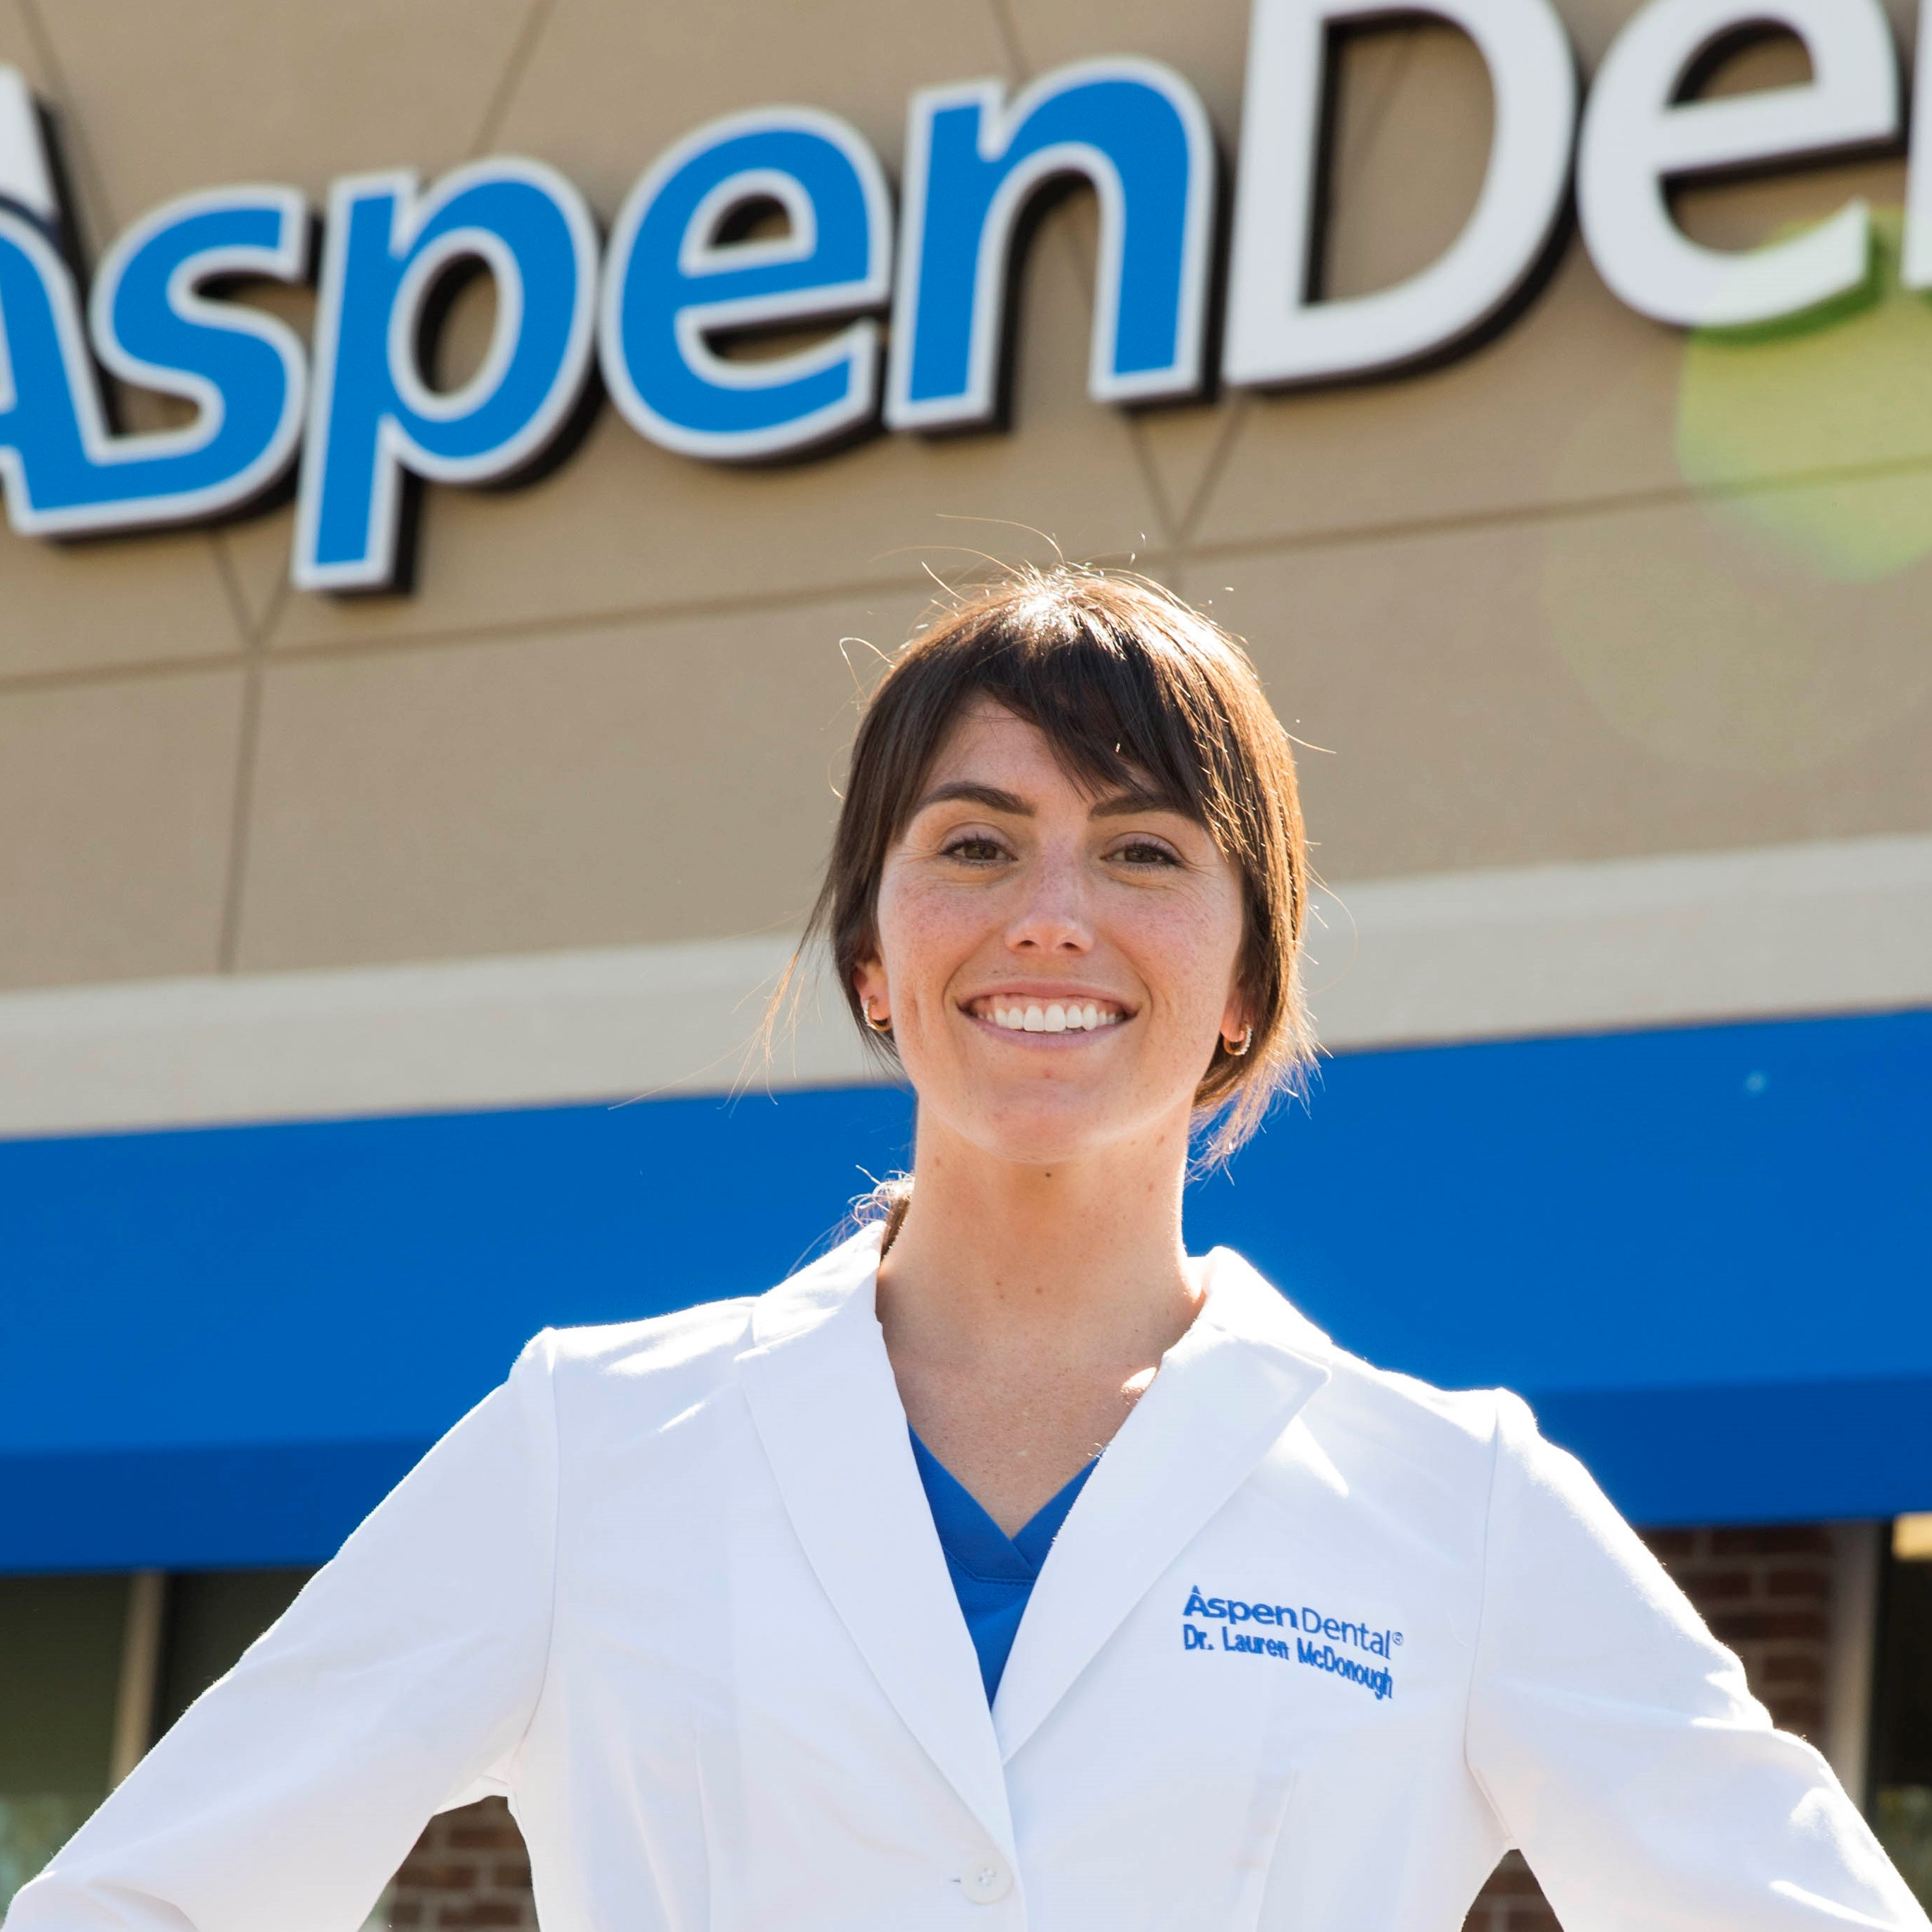 Dentist Builds Career Through Ownership, Doctor Development